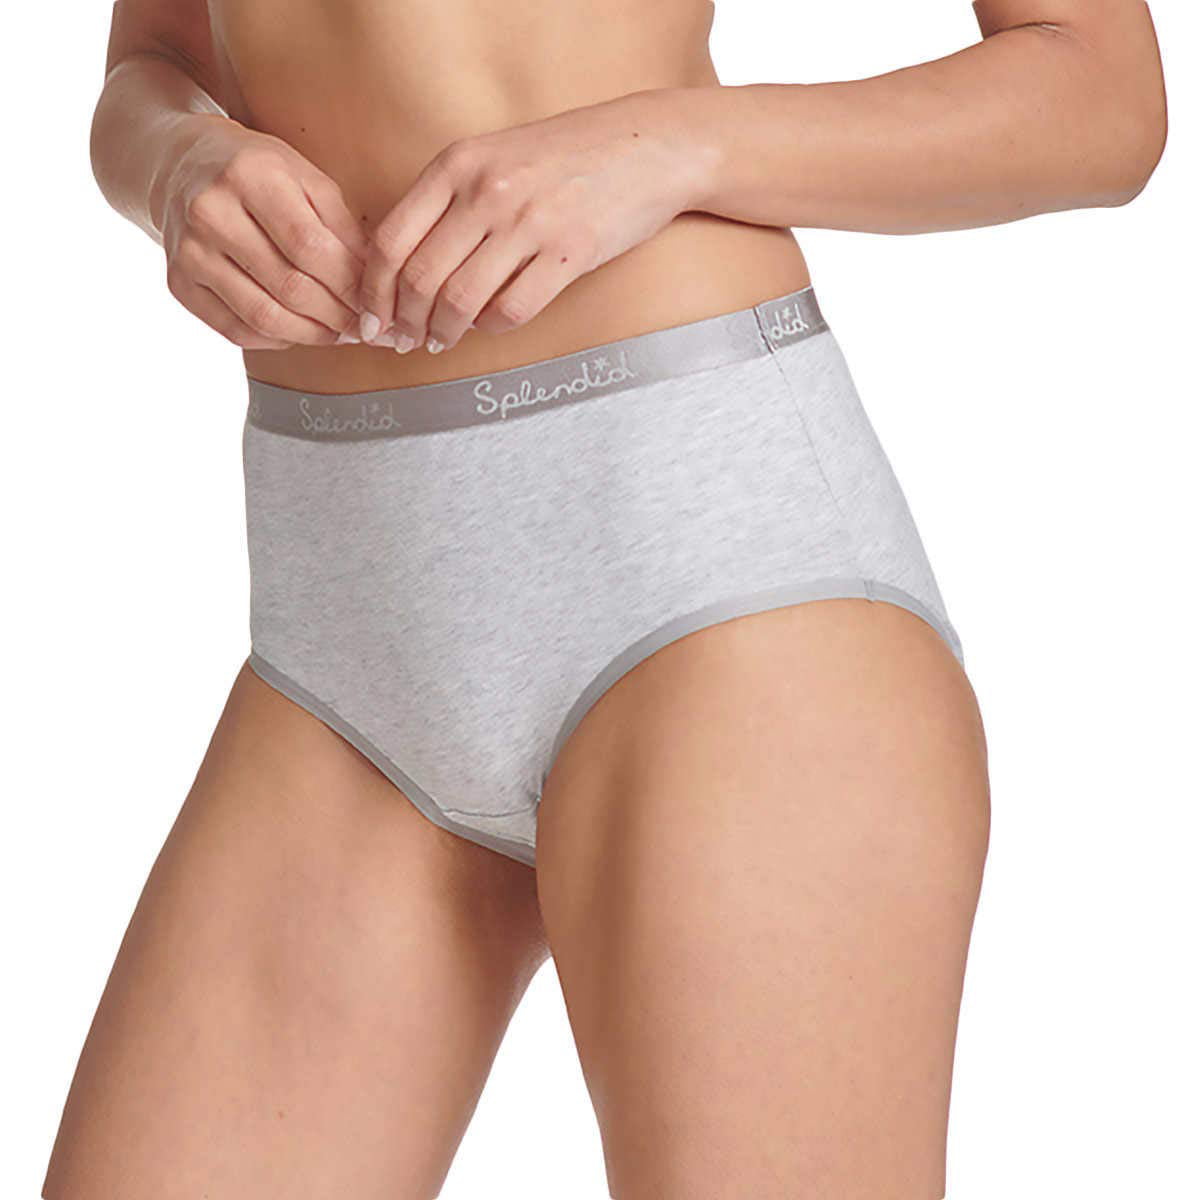 6-Pack Splendid Women's Super Soft Brief Underwear Panty Multi-color Sexy  Smooth